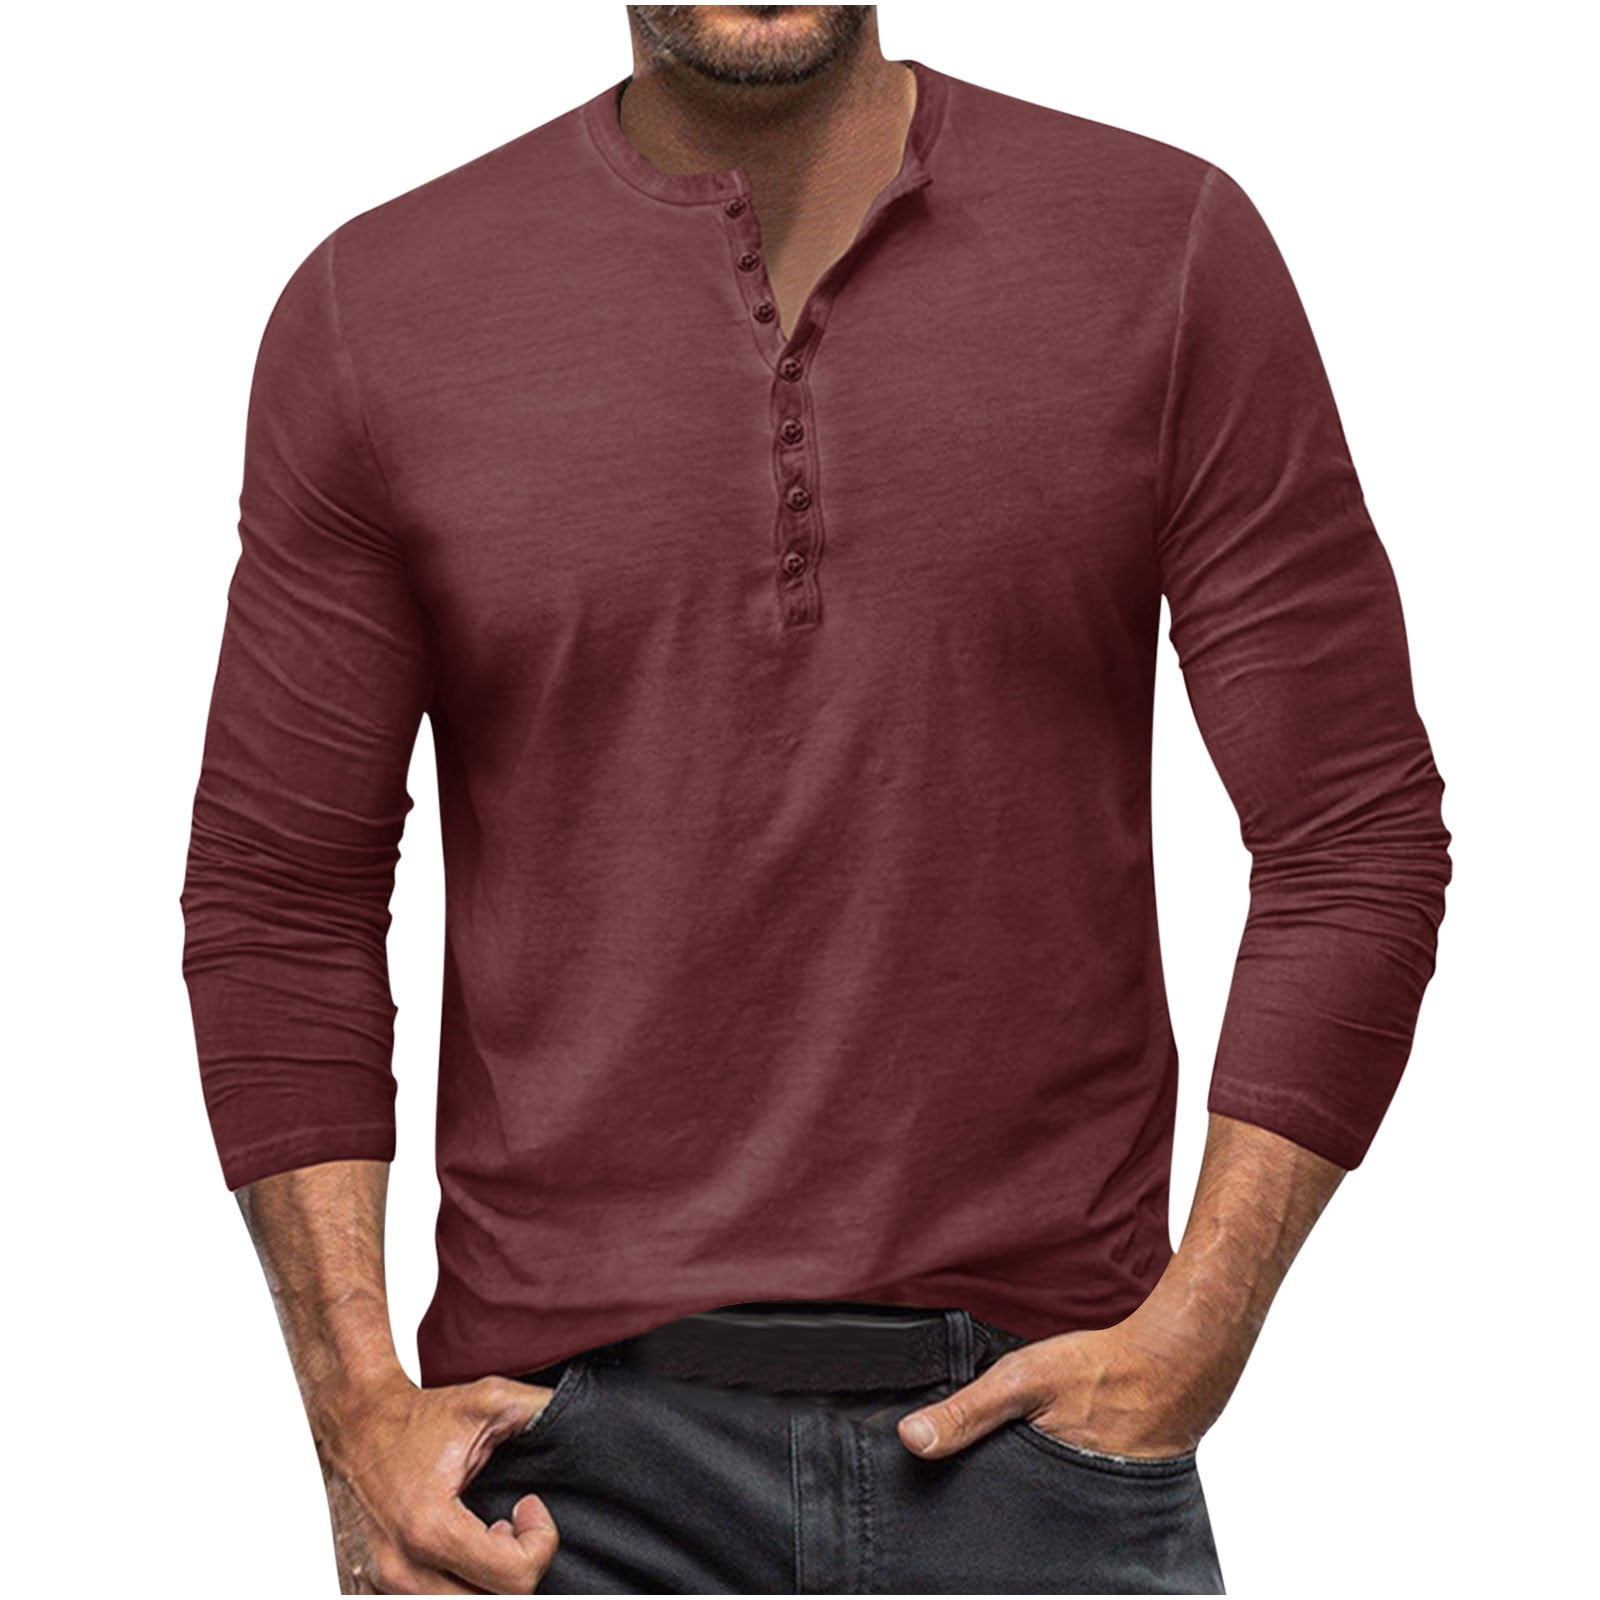 RYRJJ Mens Henley Shirts Long Sleeve T Shirt Fashion Casual Slim